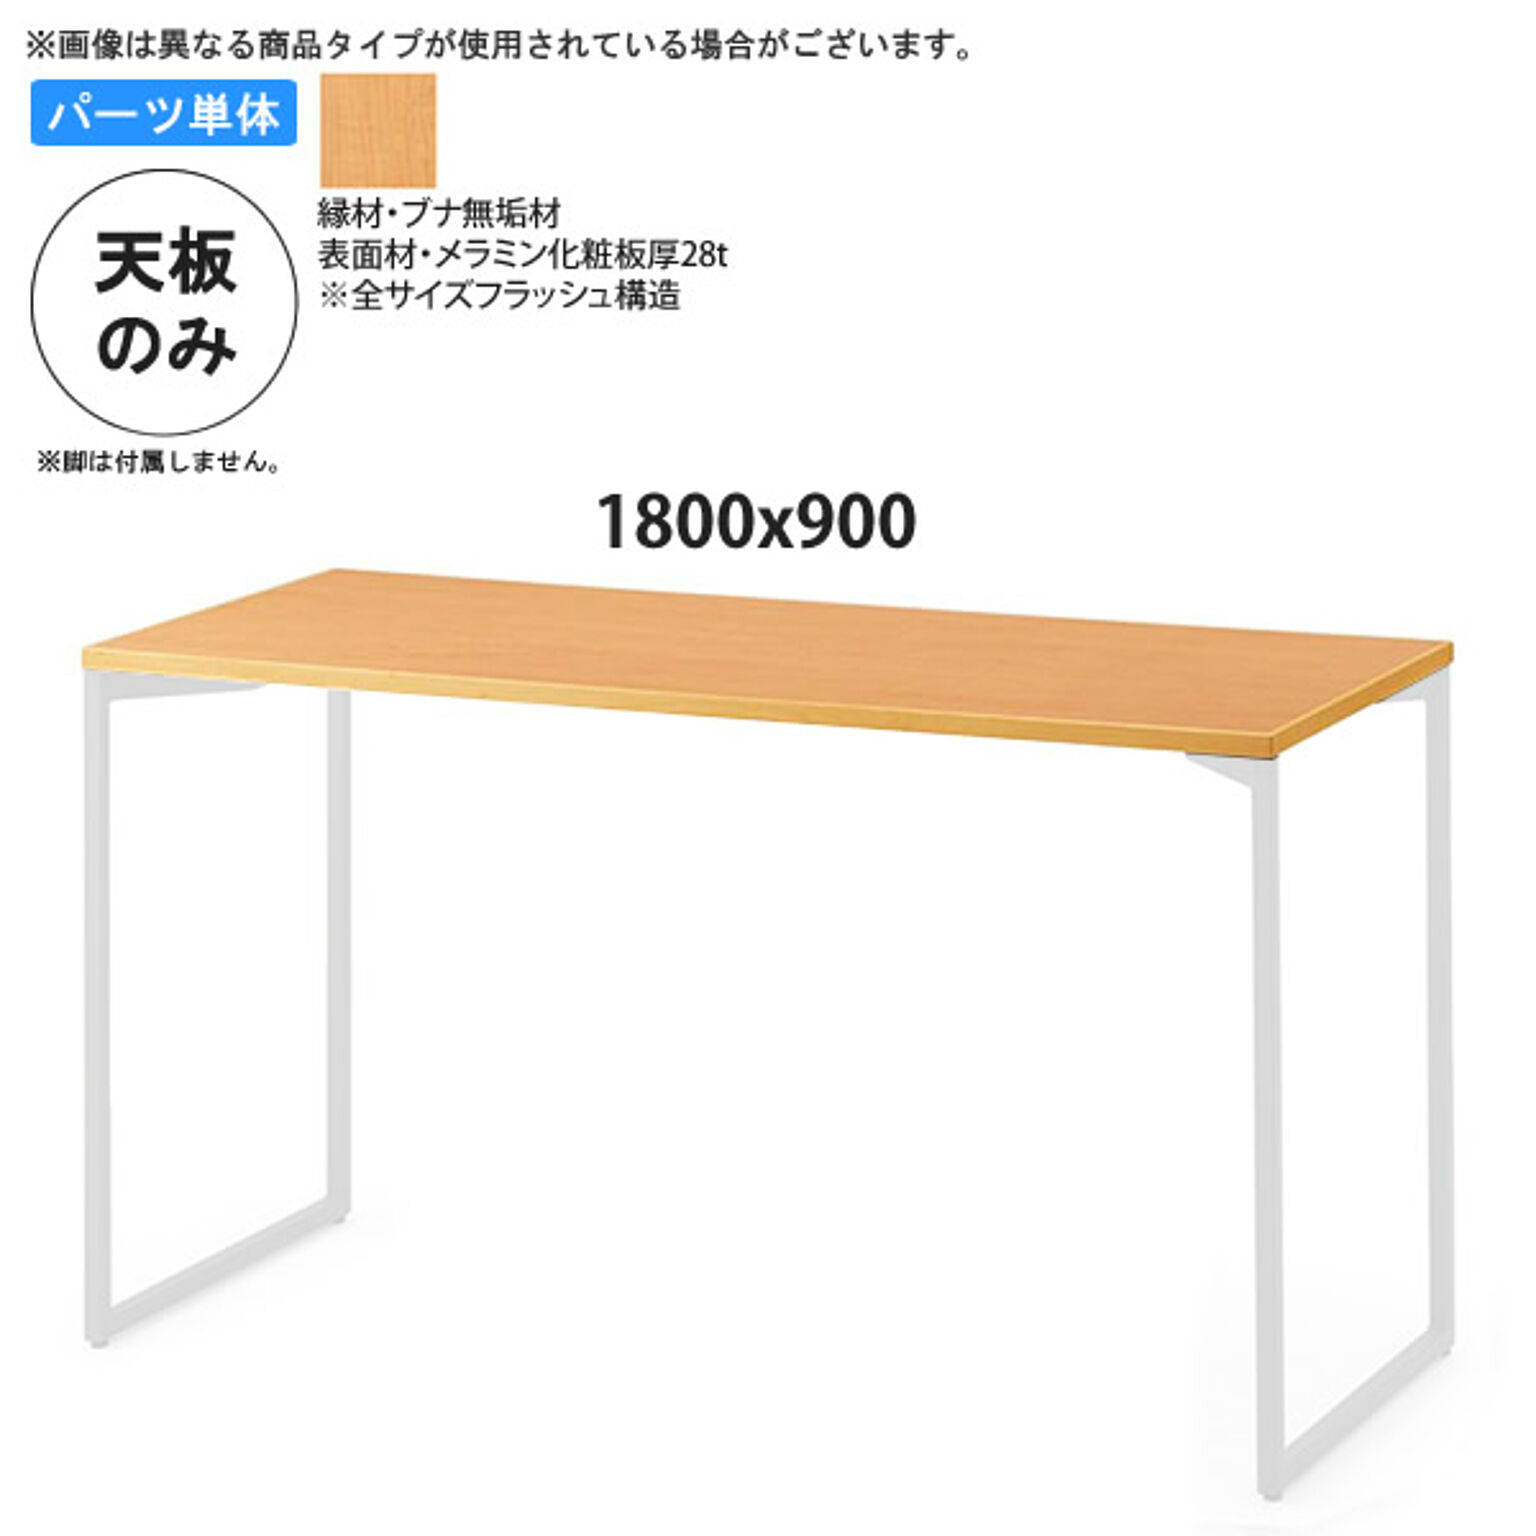 1800x900 テーブル天板のみ 業務用家具：table topシリーズ★ ブナ木縁メラミン天板 天厚28 日本製 受注生産